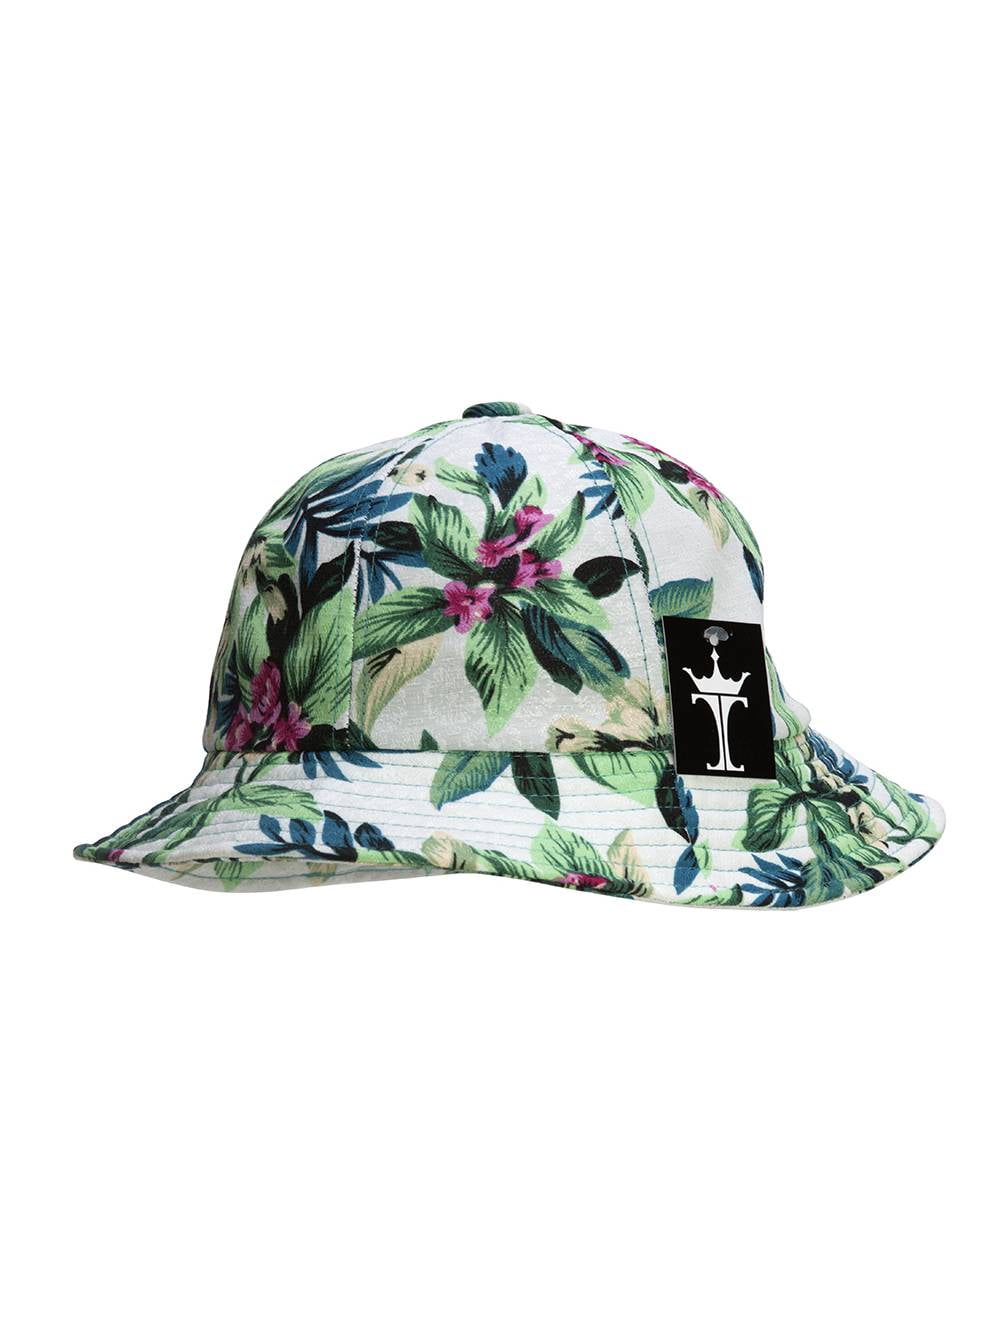 Details about   Floral Bucket Hat Cap Camping Fishing Brim Sun Safari Hawaiian Kids Boonie Hats 